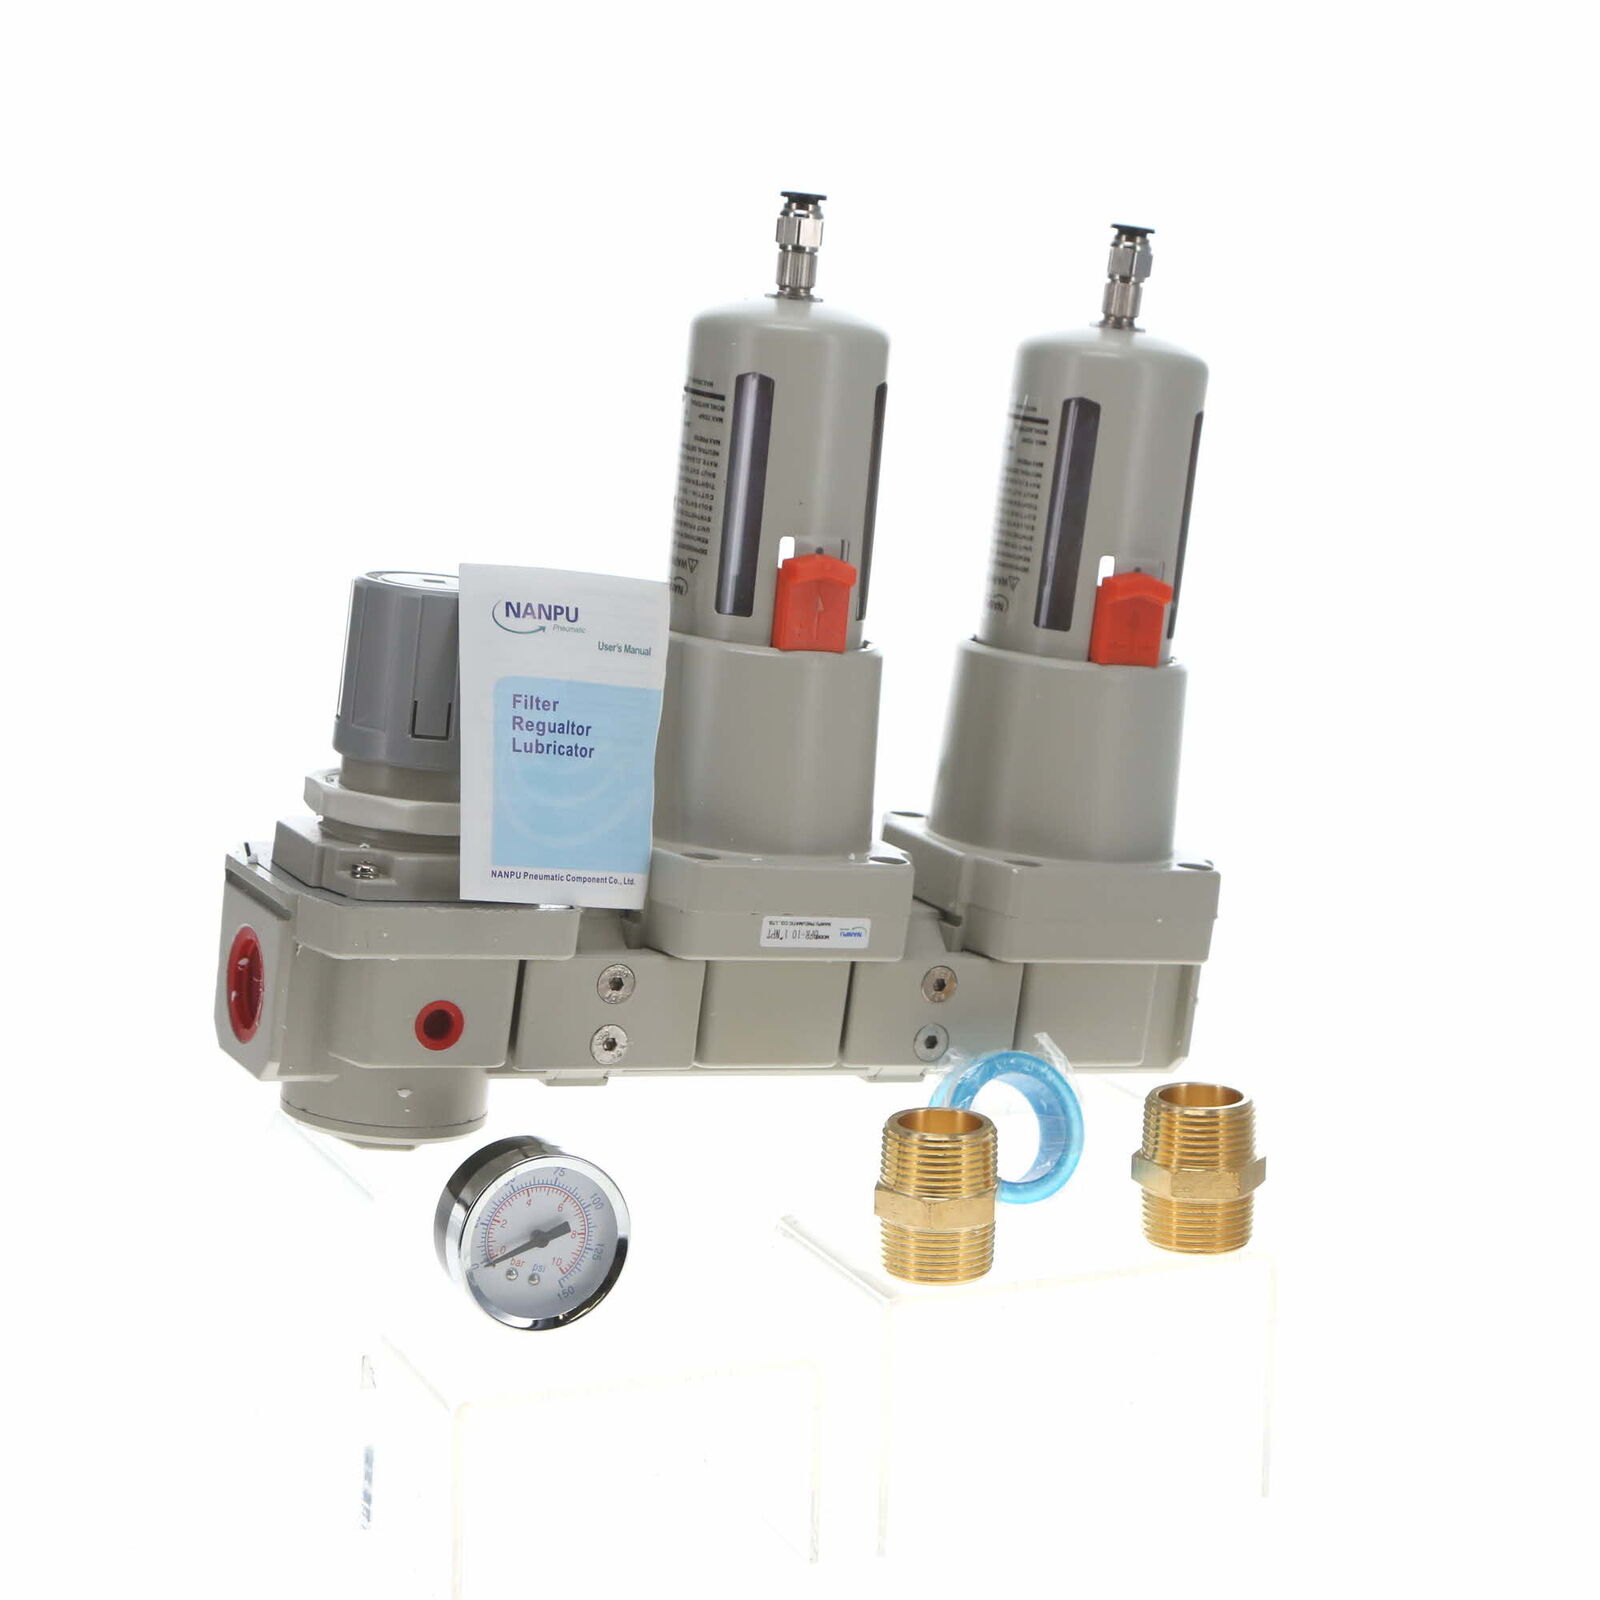 Nanpu Npt Air Drying System Double Air Filters/pressure Regulator Dfr-05n10 Used